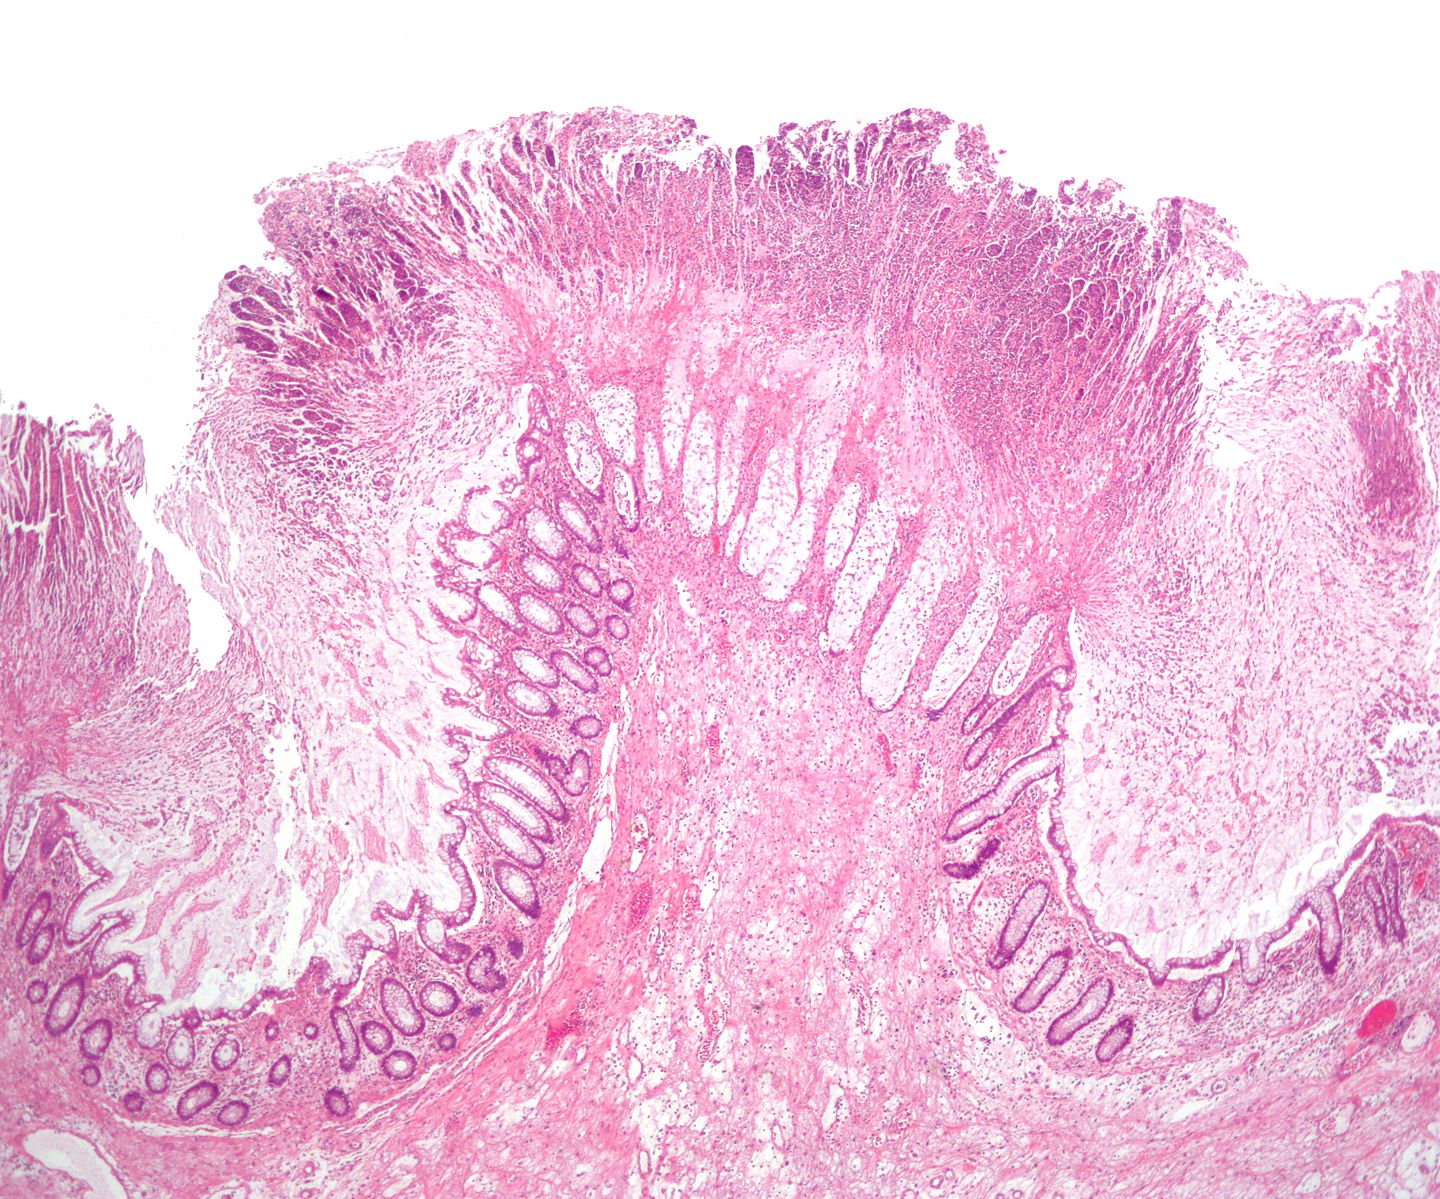 Pseudomembranous colitis. H& E staining showing pseudomembranes in Clostridium colitis [16]